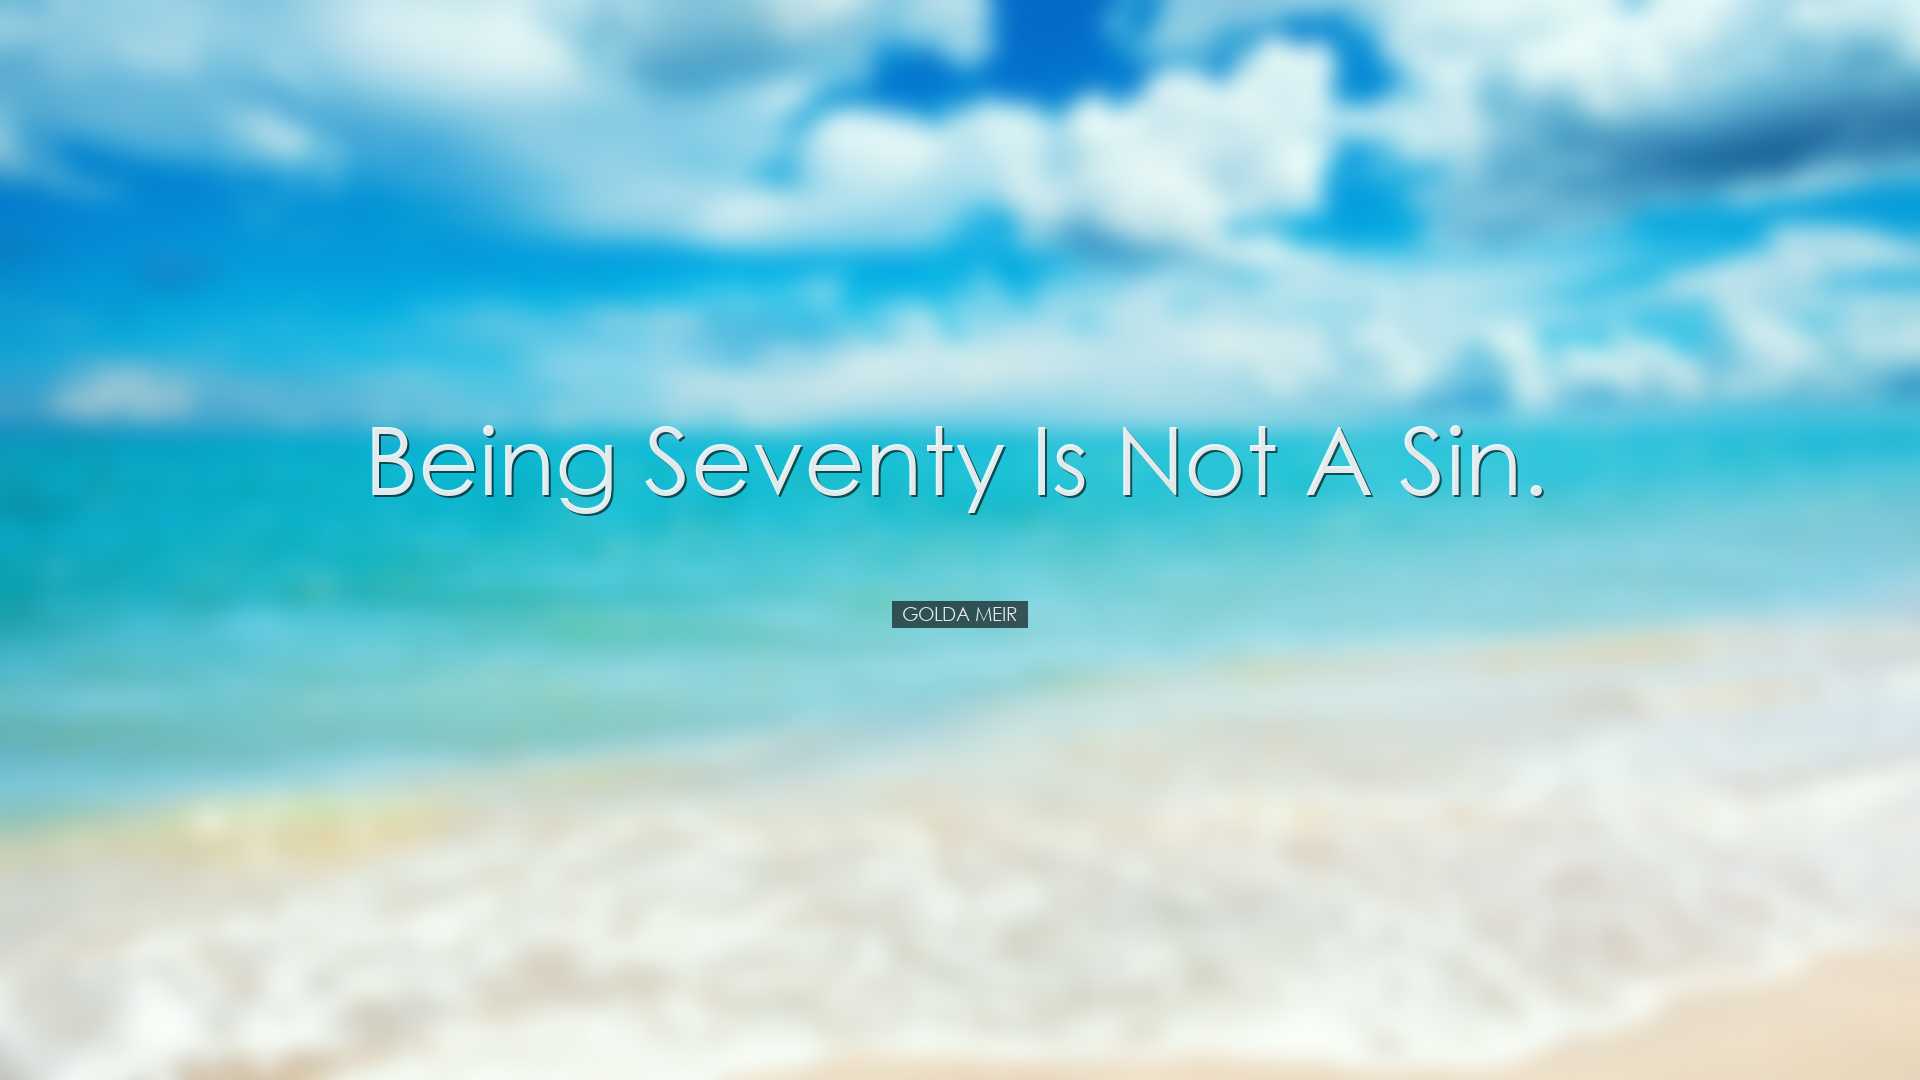 Being seventy is not a sin. - Golda Meir